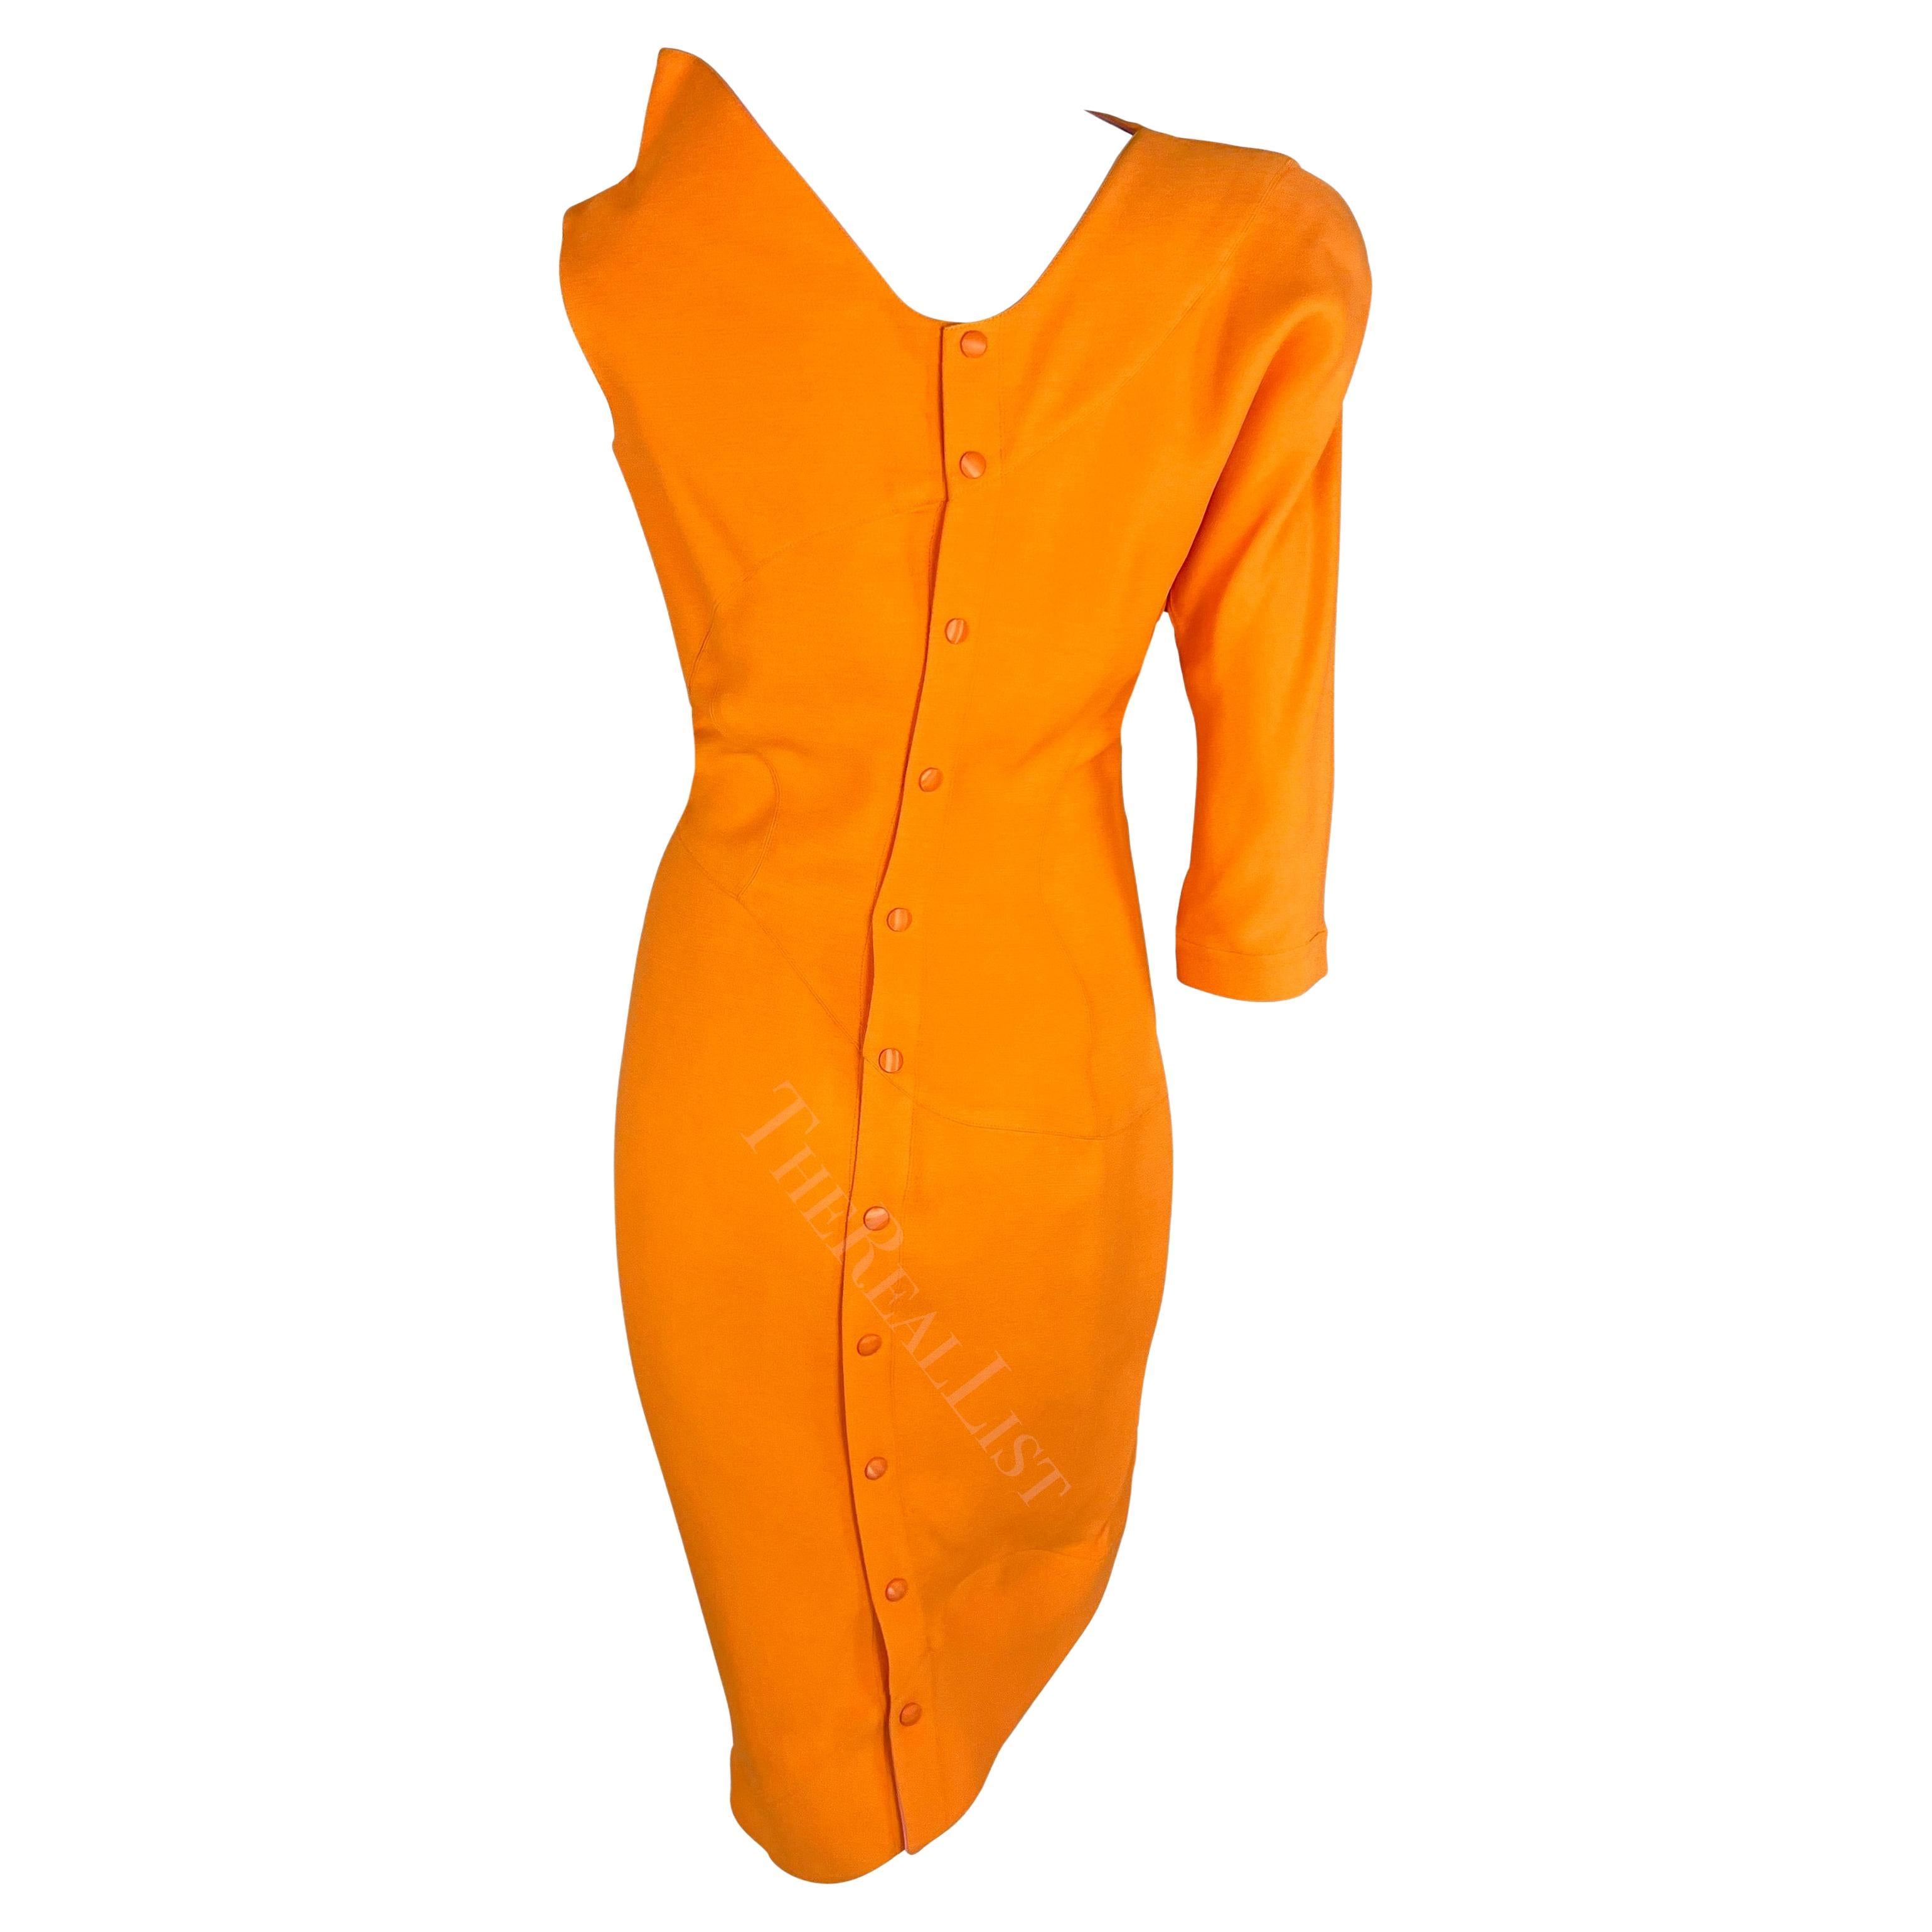 Robe Sahara sculpturale orange, défilé Thierry Mugler S/S 1988 en vente 3